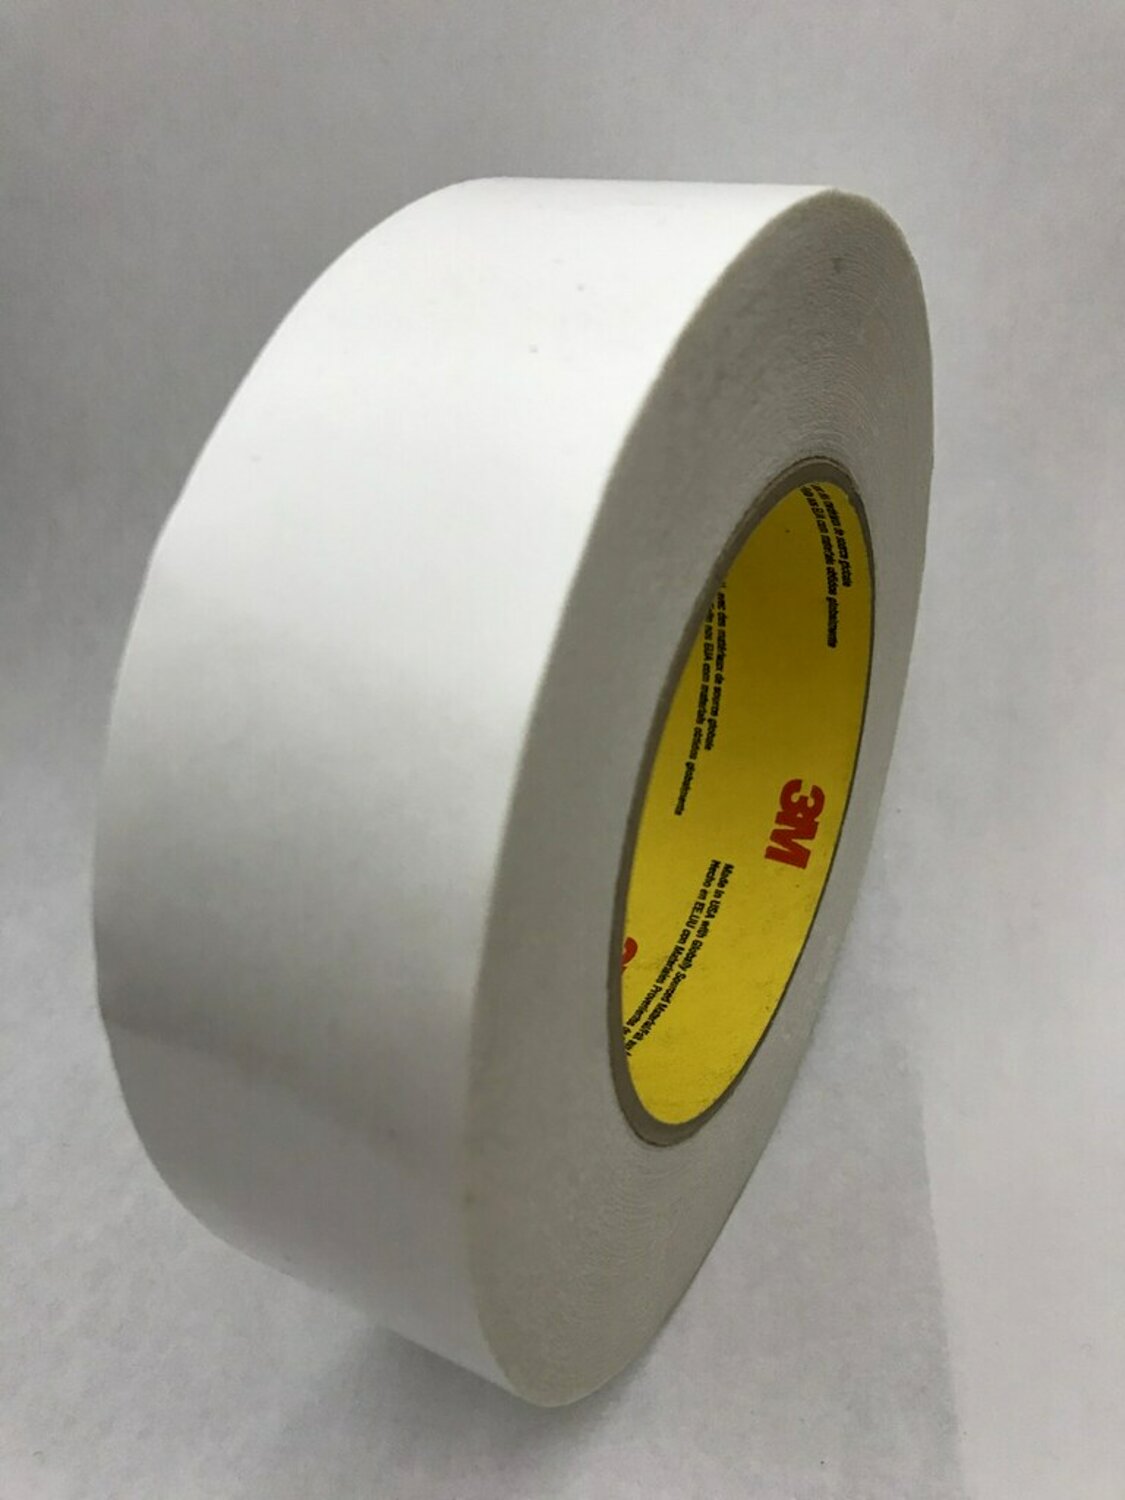 7100037554 - 3M Venture Tape Double Coated PET Tape 514CW, 37.12 mm x 50 m, 0.01
mm, 32 rolls per case